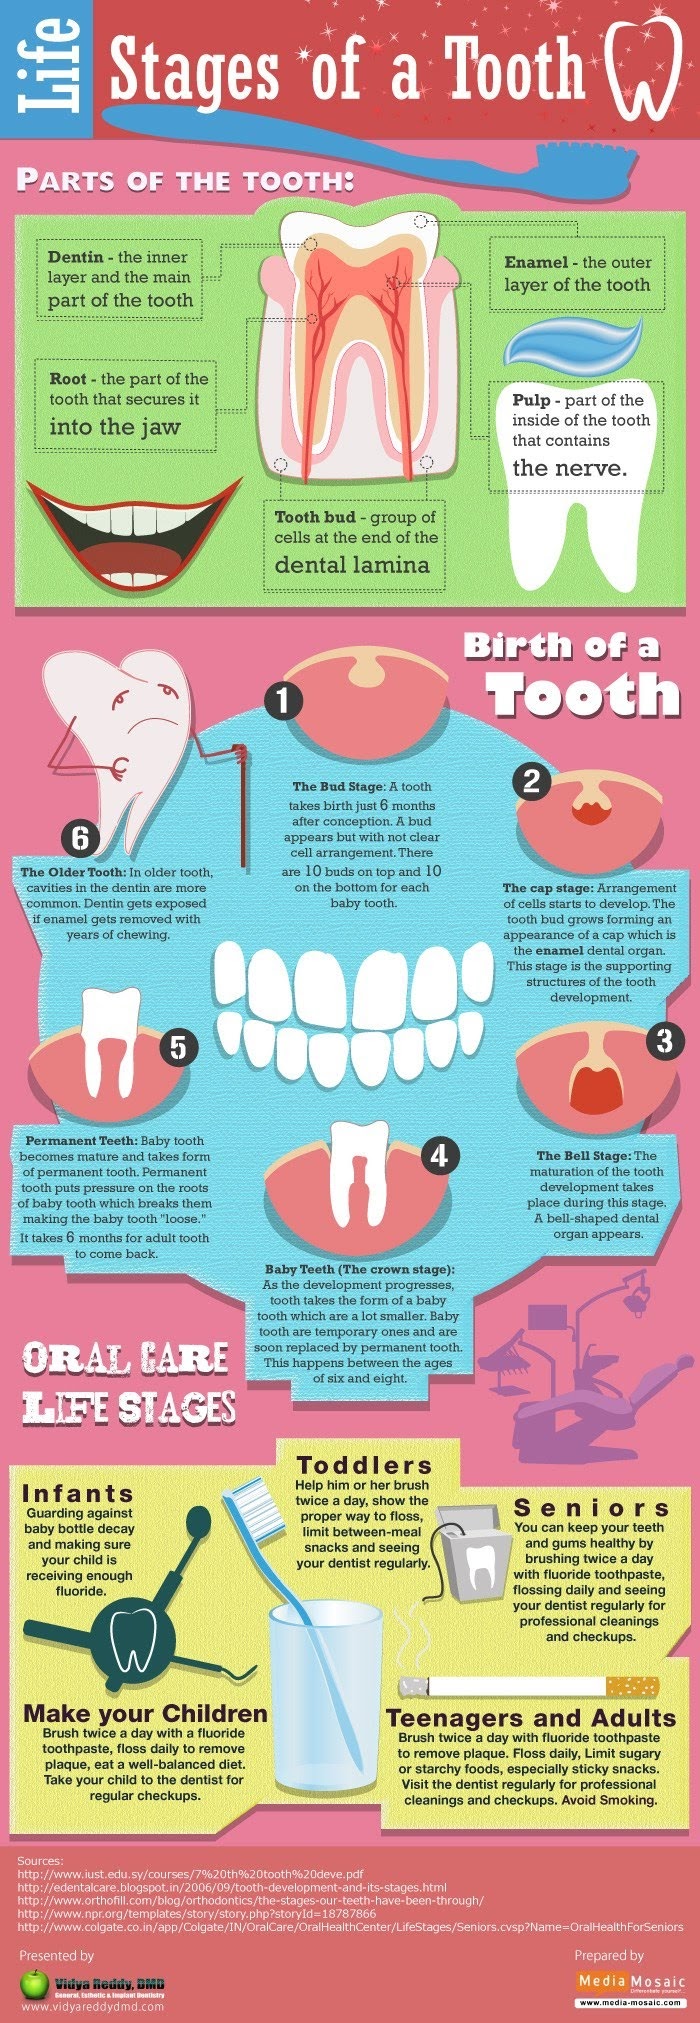 Dental Industry Infographic Sample | Pennington Creative